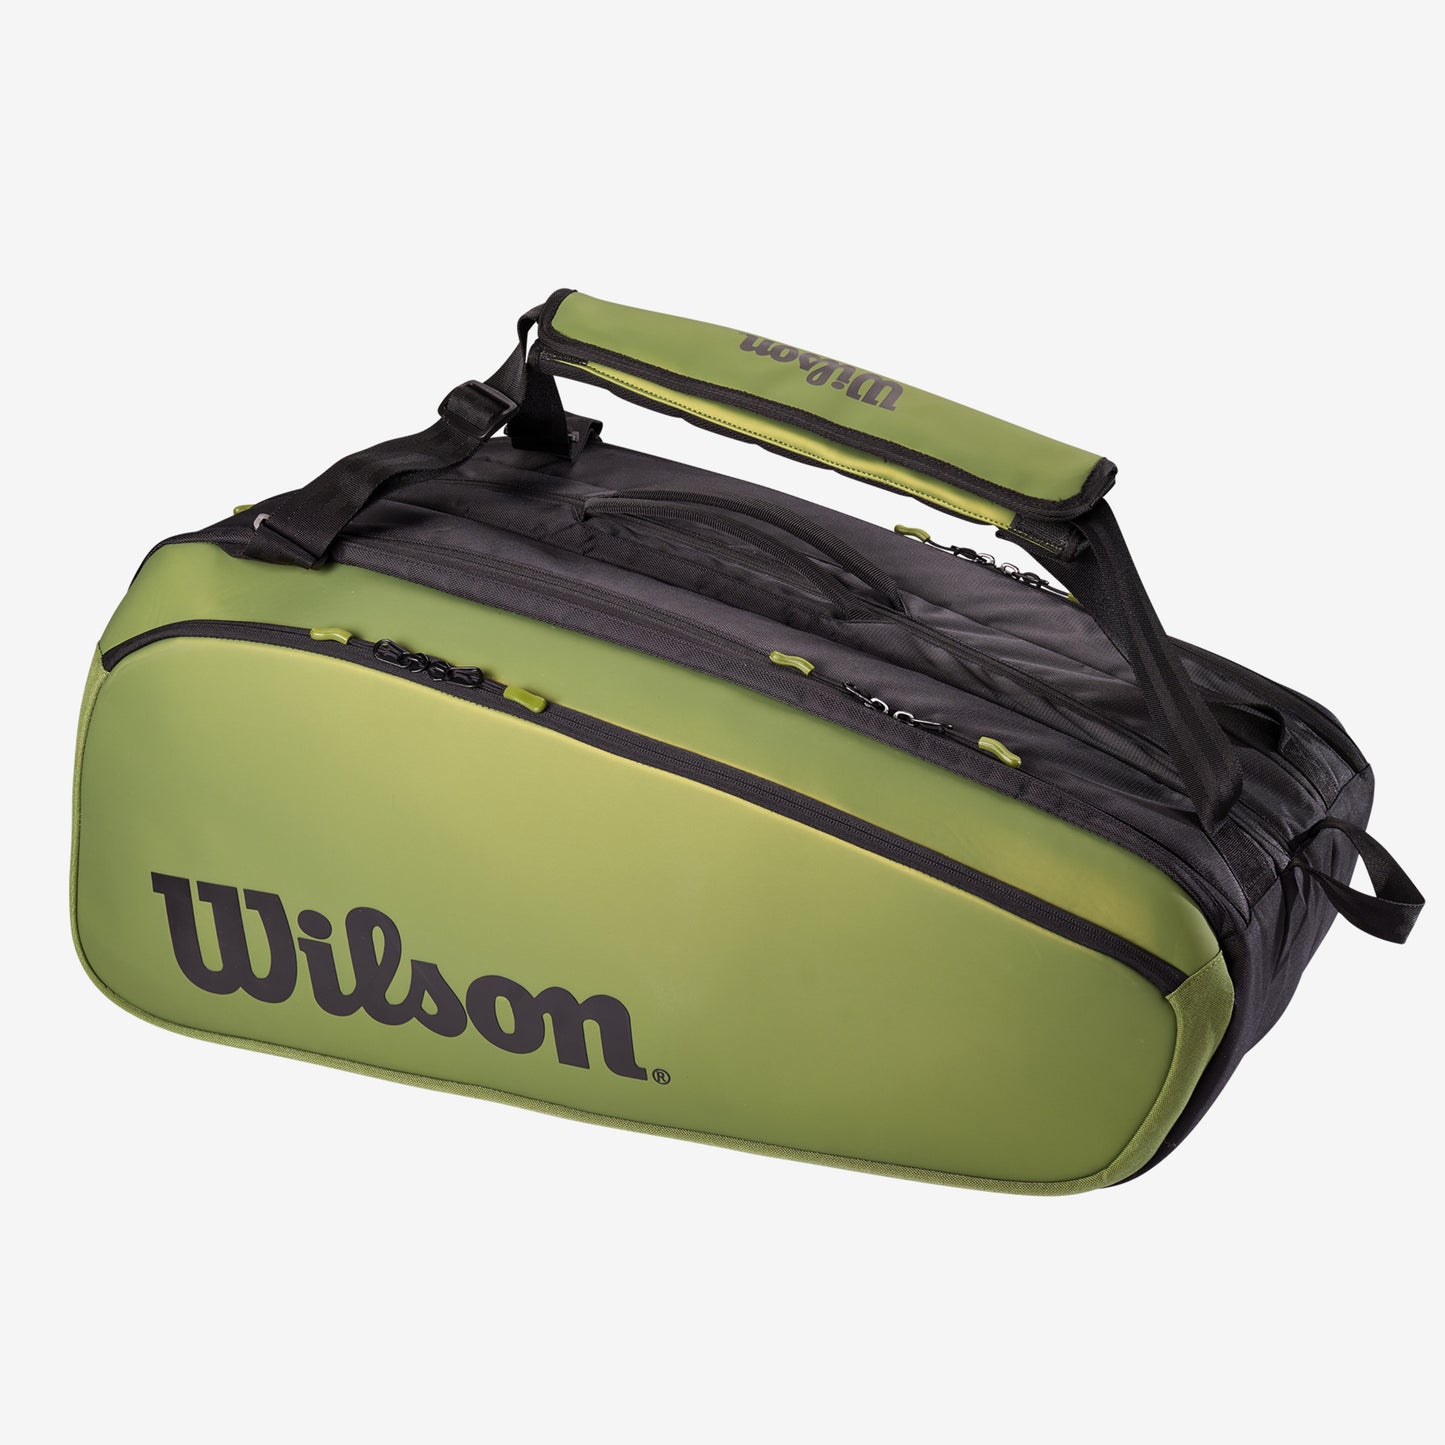 Wilson Super Tour Blade v8 15-pack tennis bag